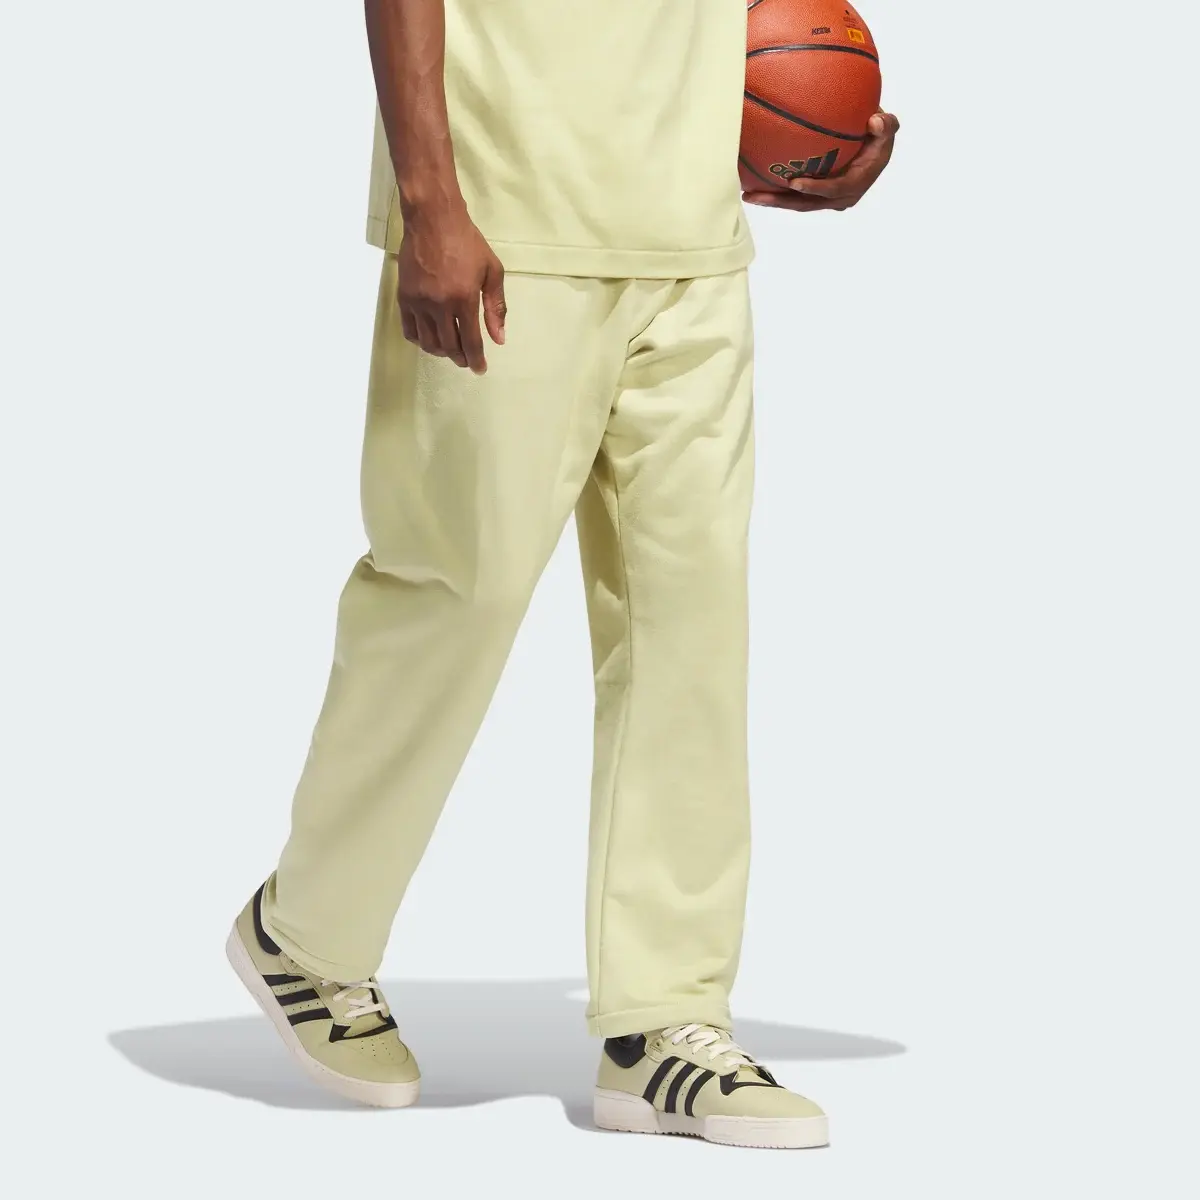 Adidas Spodnie Basketball Sueded. 3